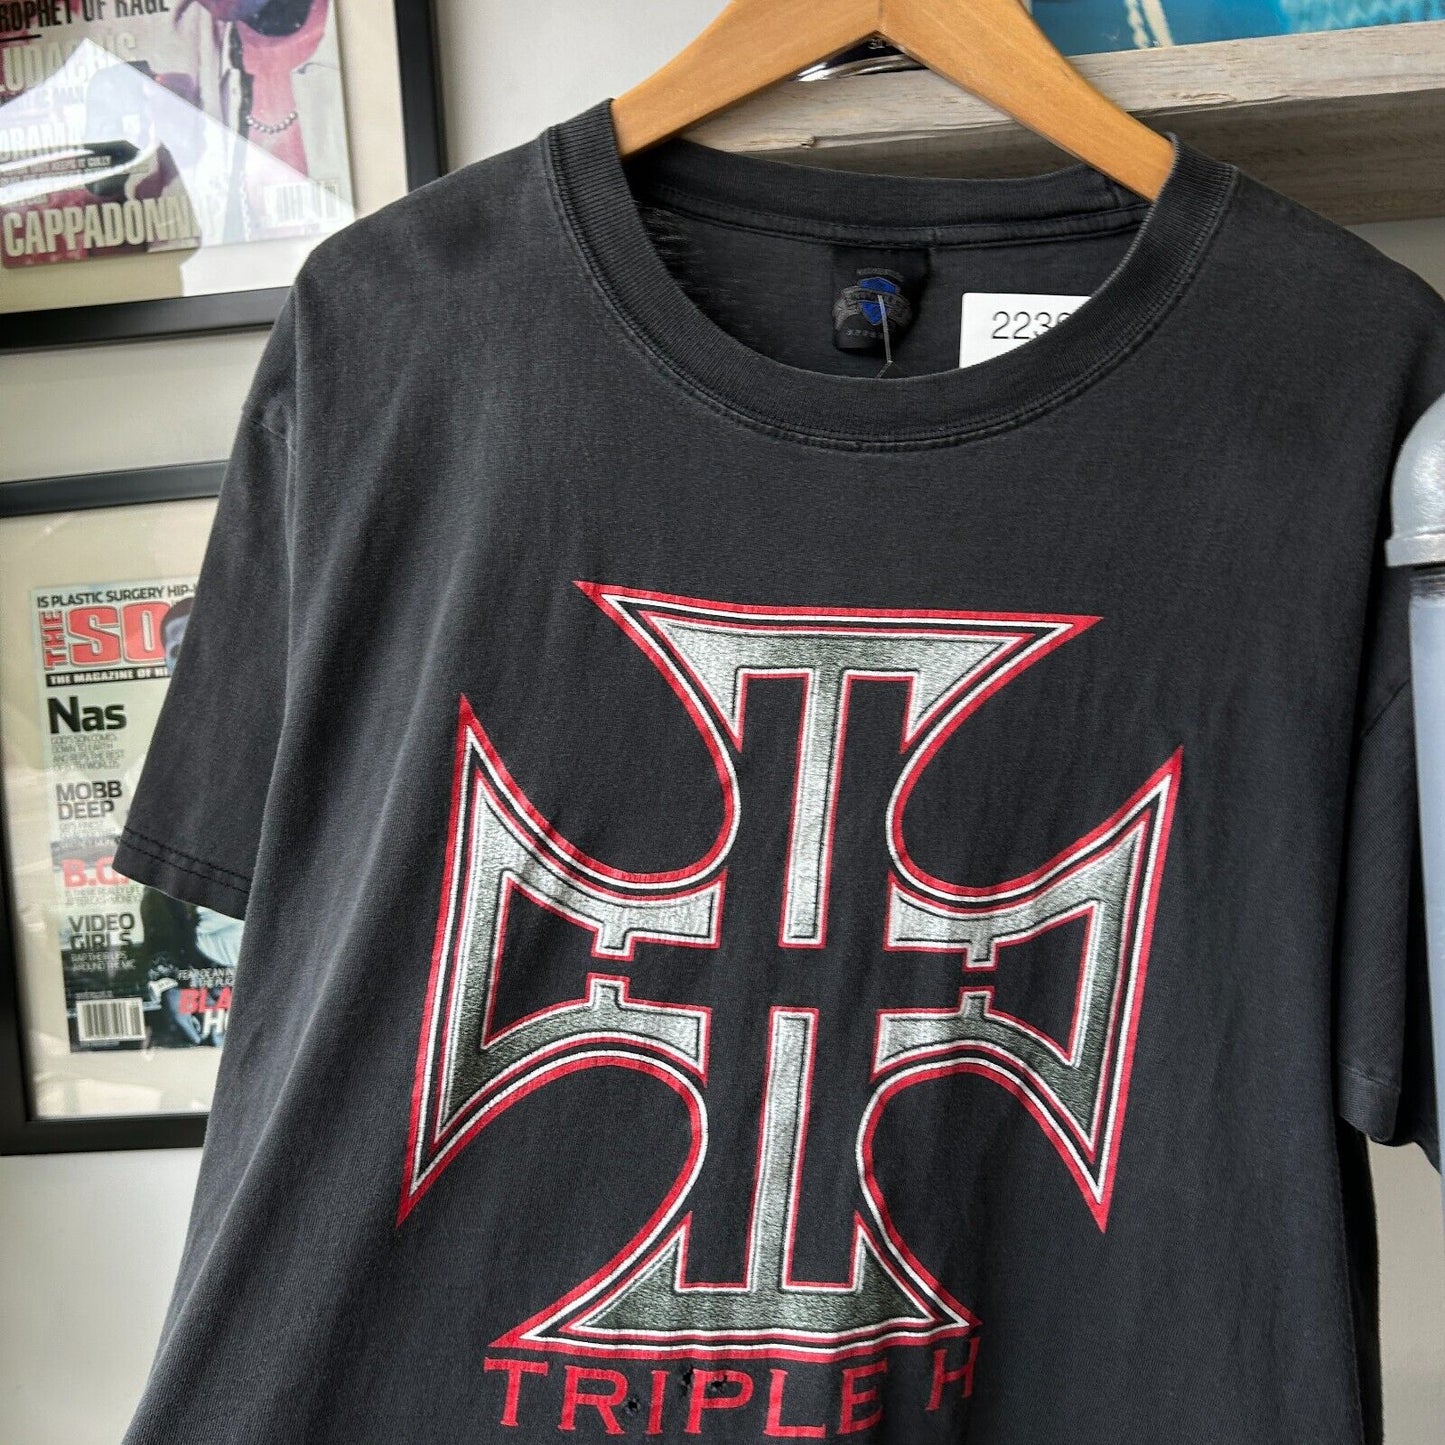 VINTAGE 2001 | WWF TRIPLE H The Game Wrestling T-Shirt sz L Adult